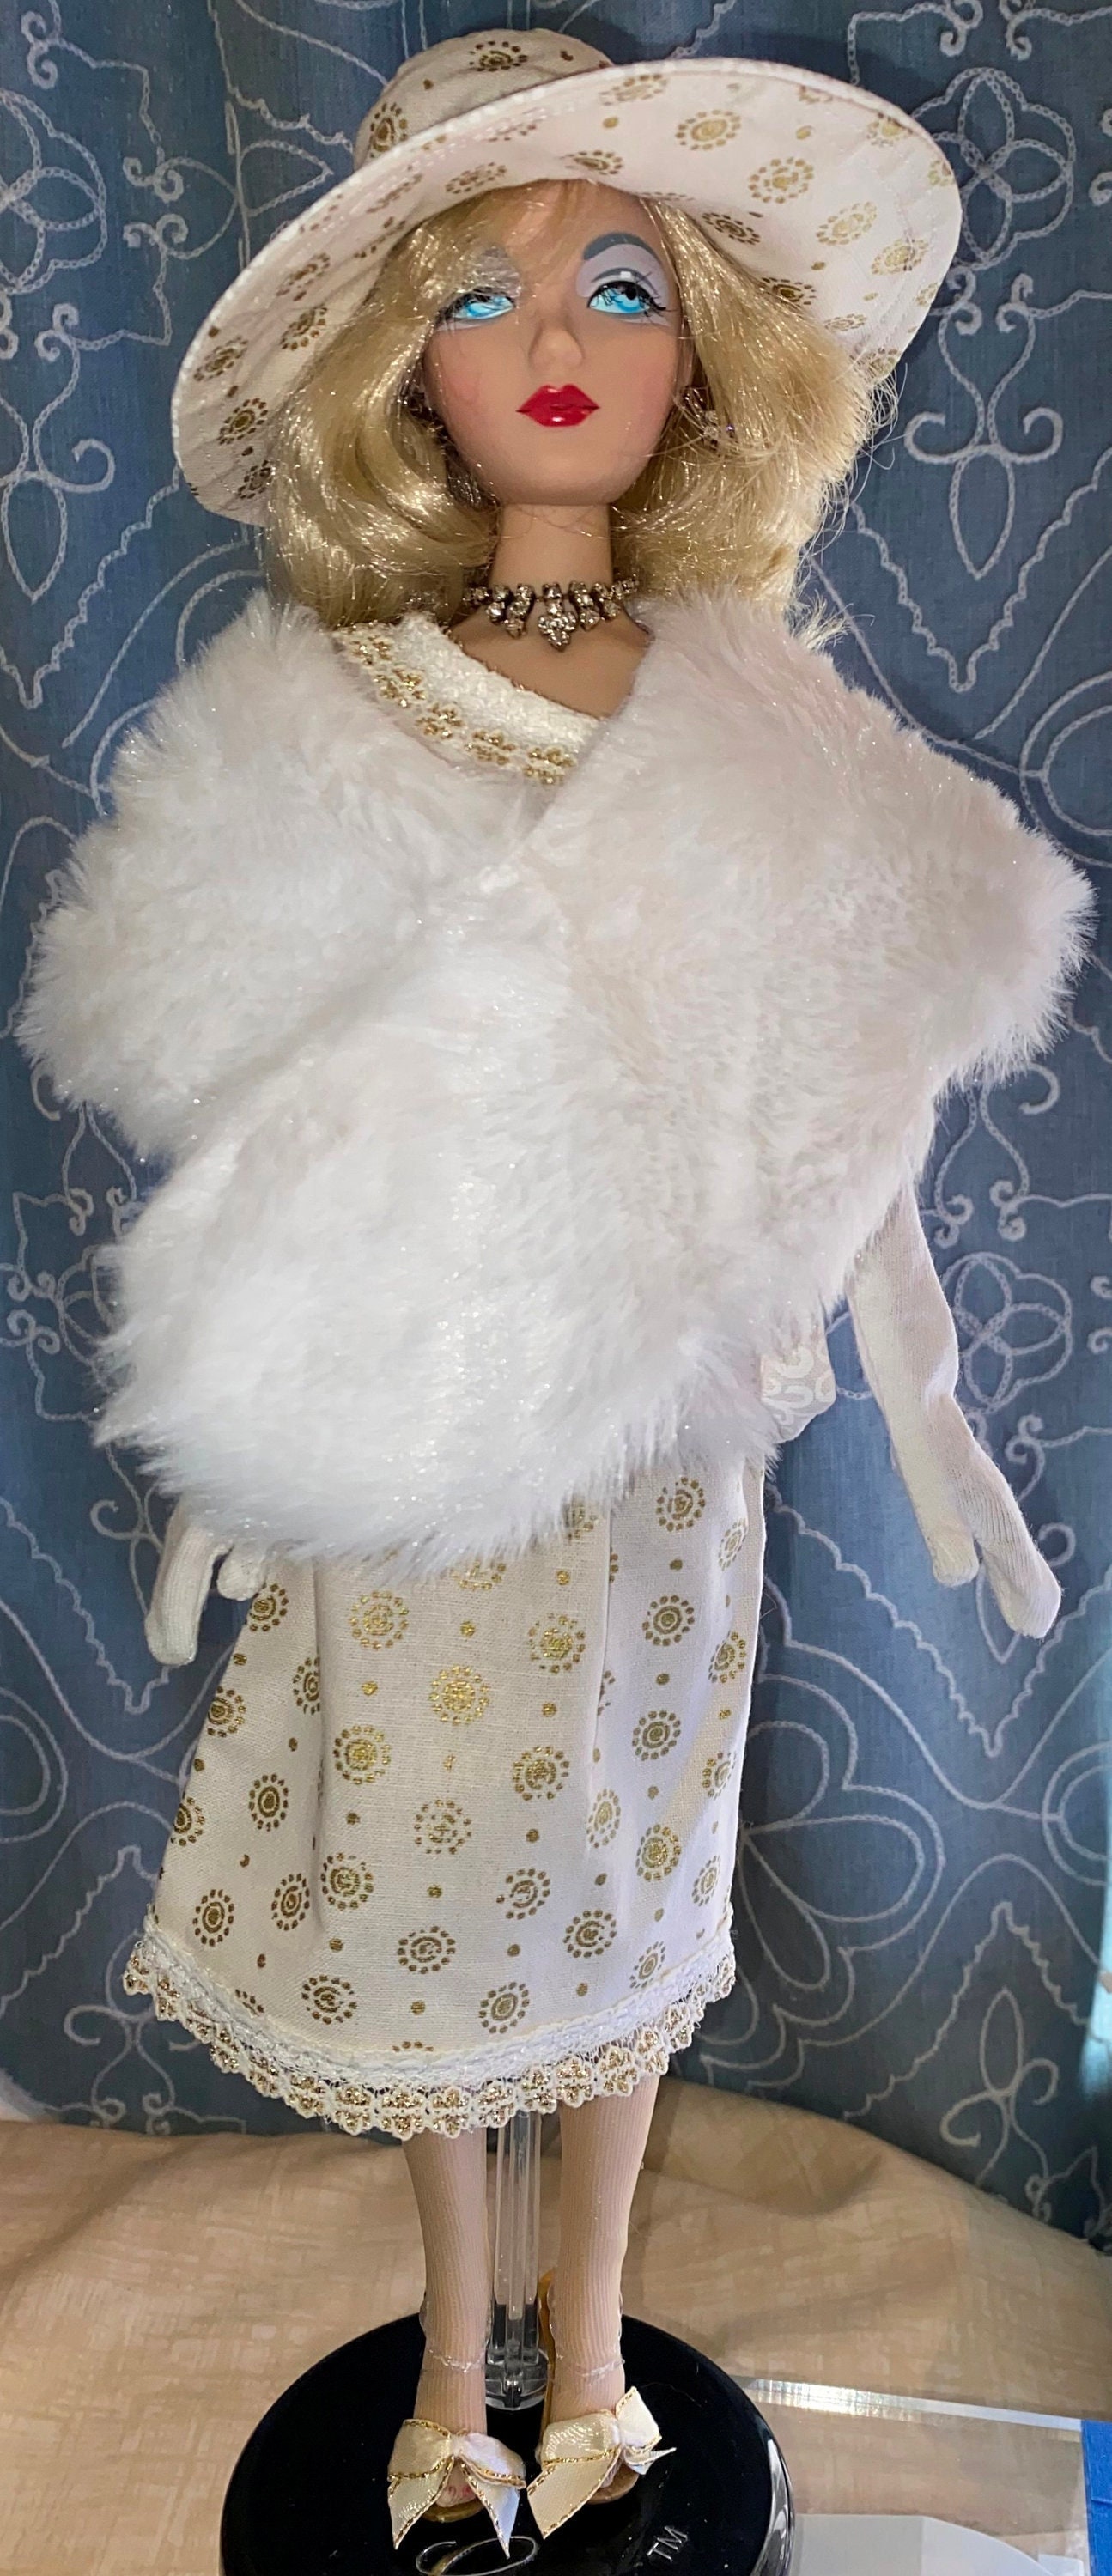 16” Ashton Drake Gene Doll Outfit “It’s A Wrap” Robe & Night Gown Duckie  MIB #p1